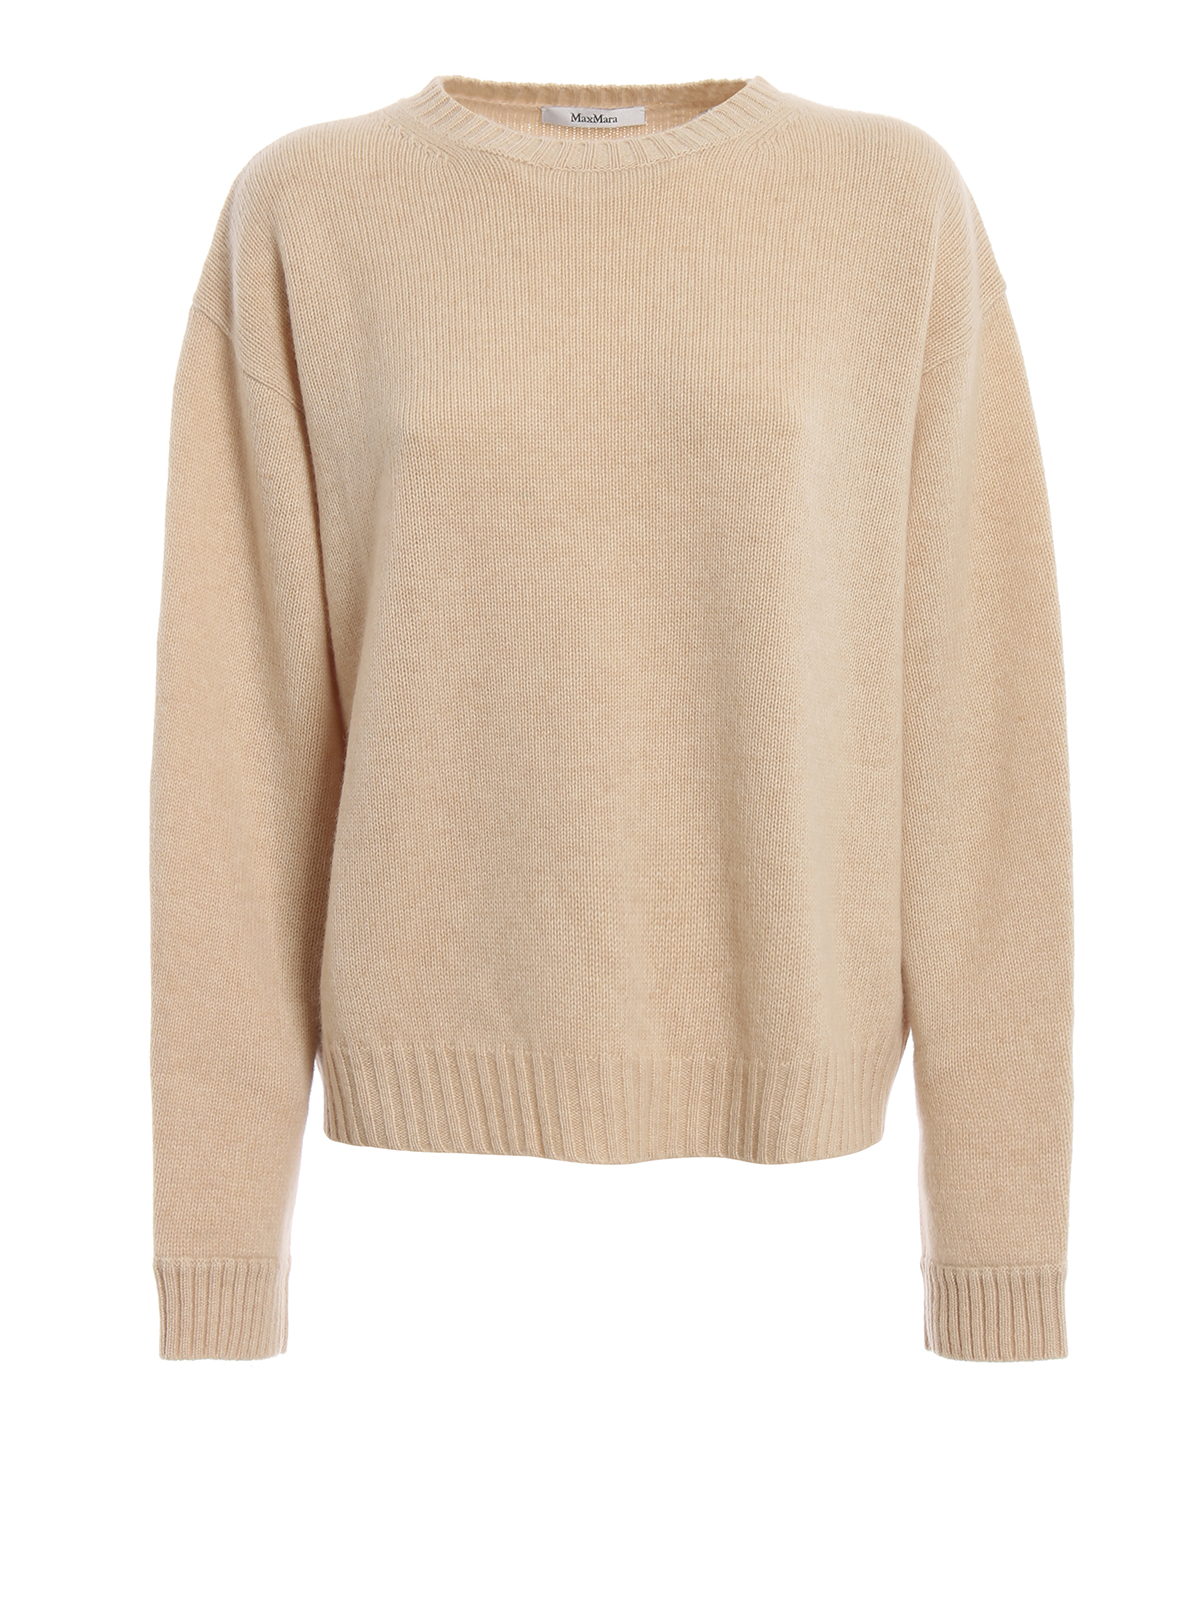 Max Mara - Onda beige cashmere oversized sweater - crew necks ...